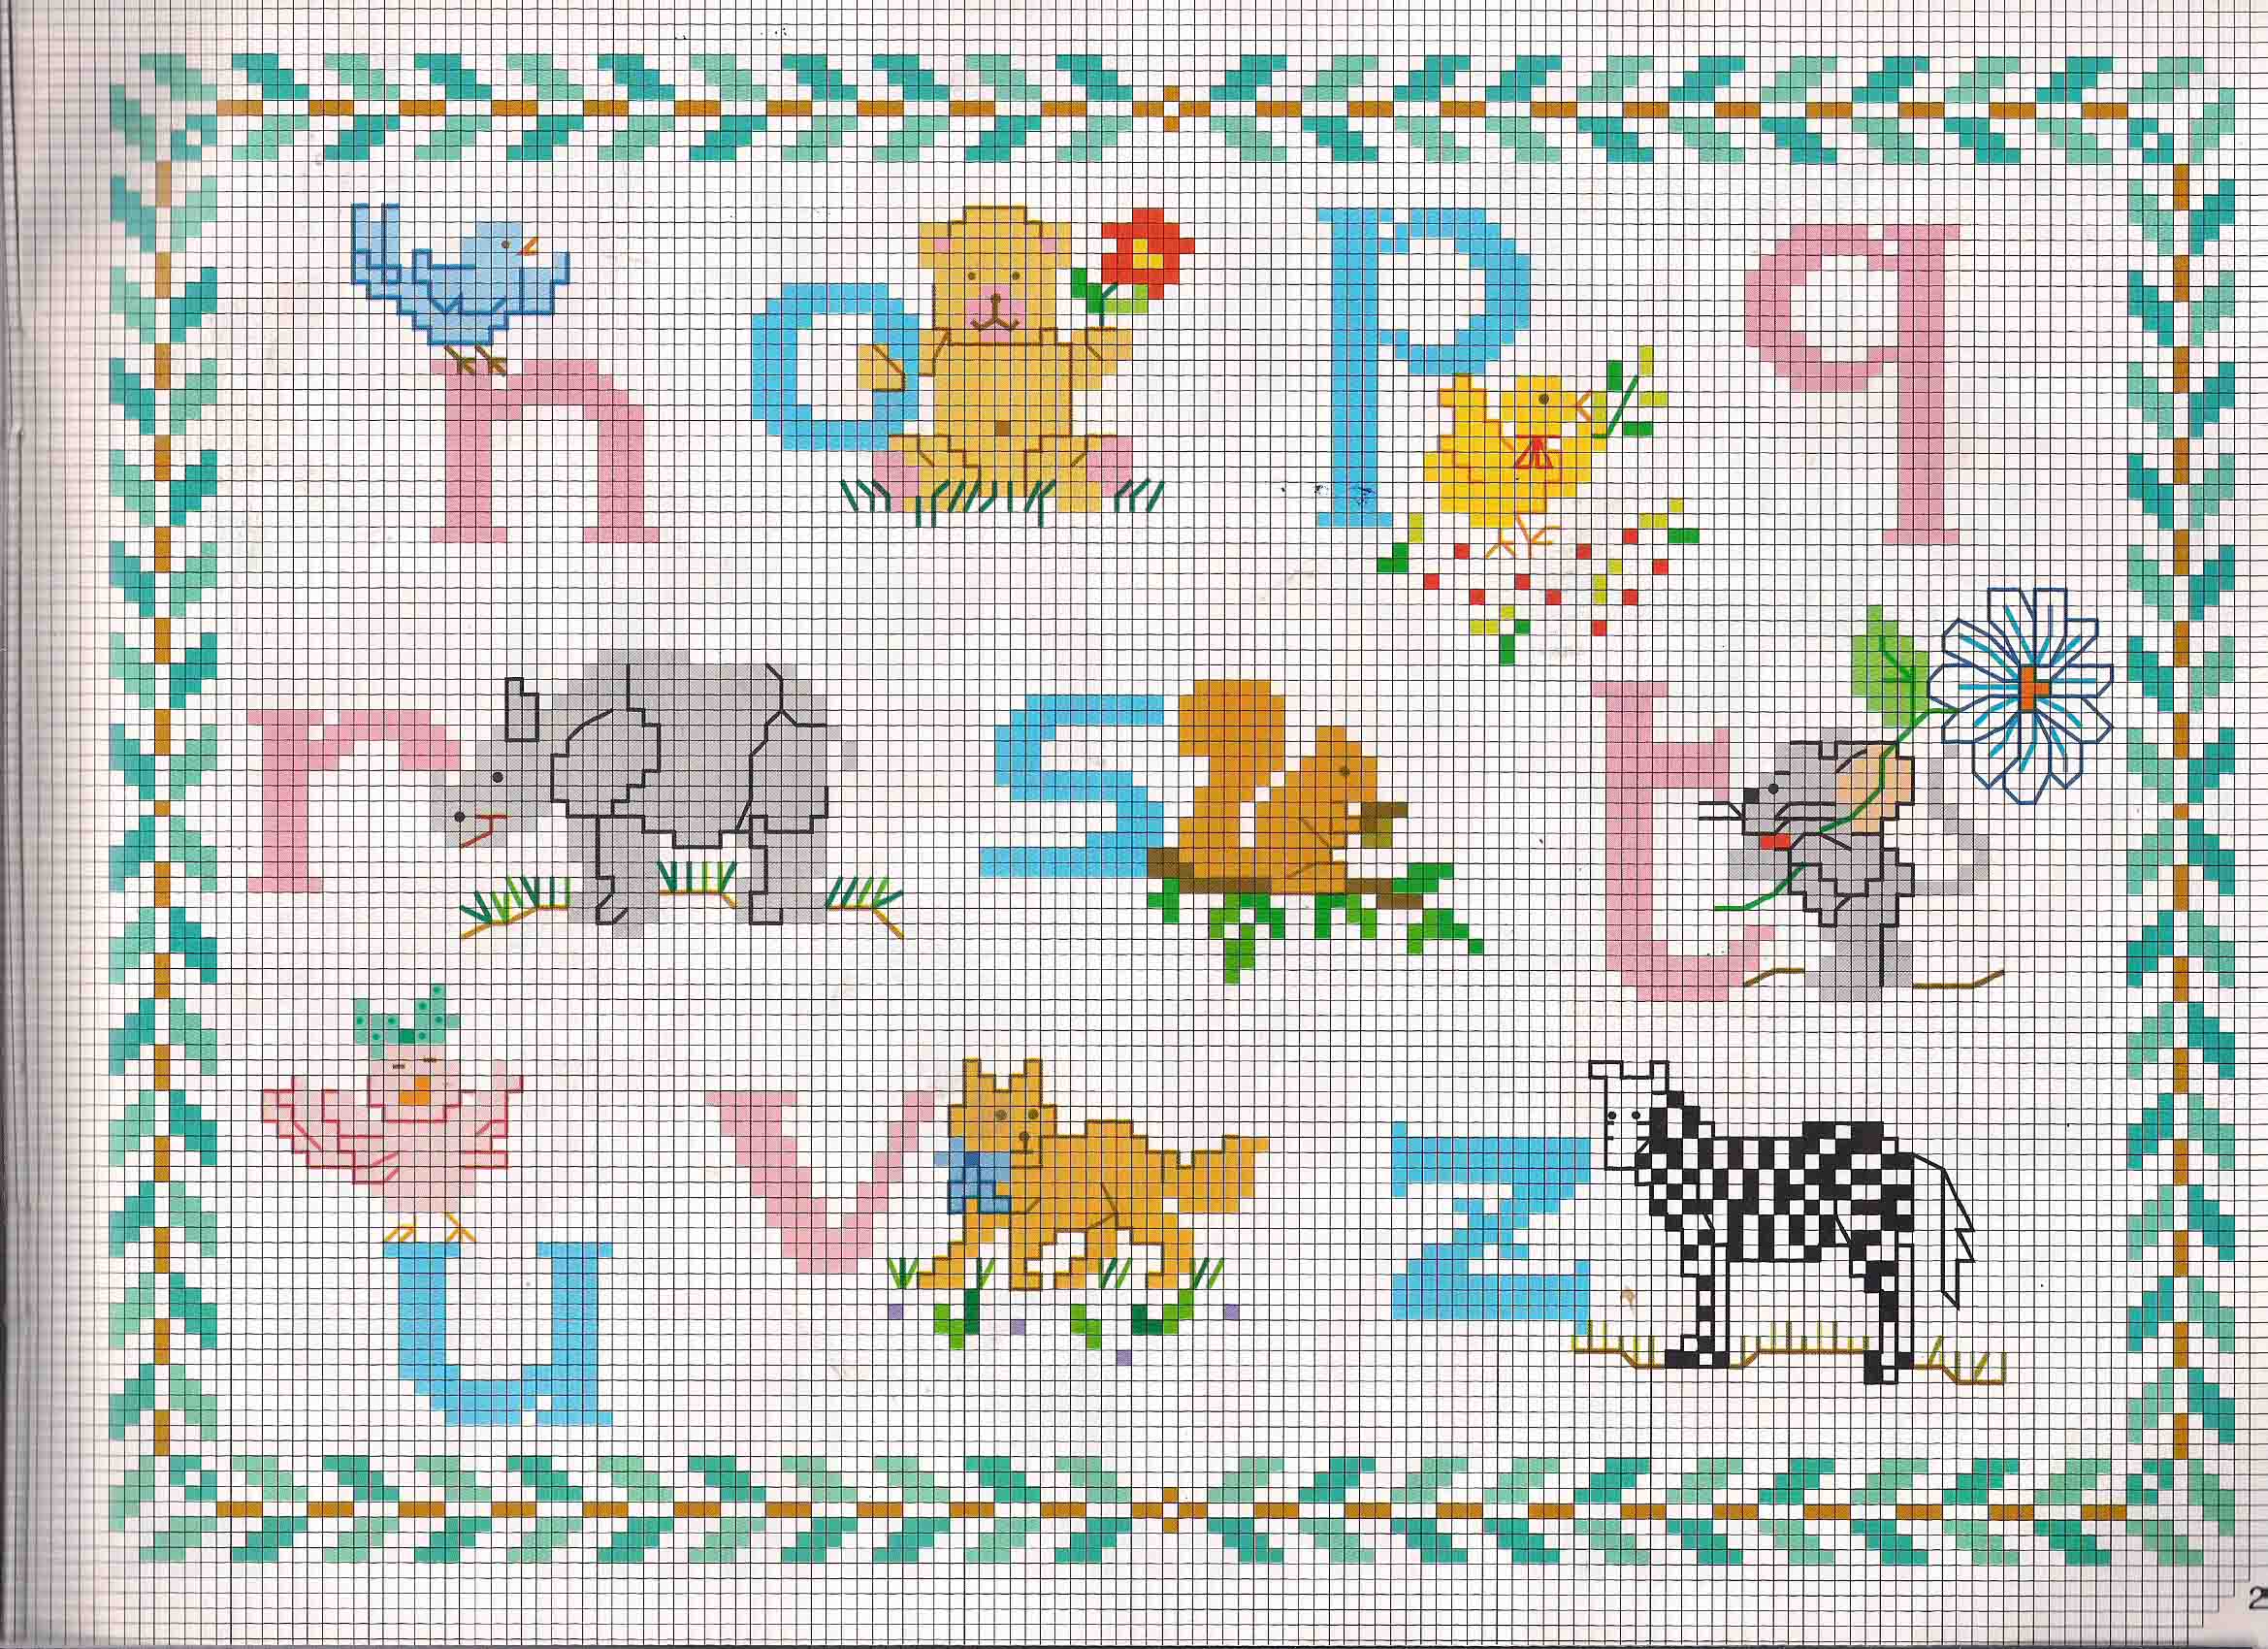 Cross stitch alphabet light blue and pink with small animals (2)